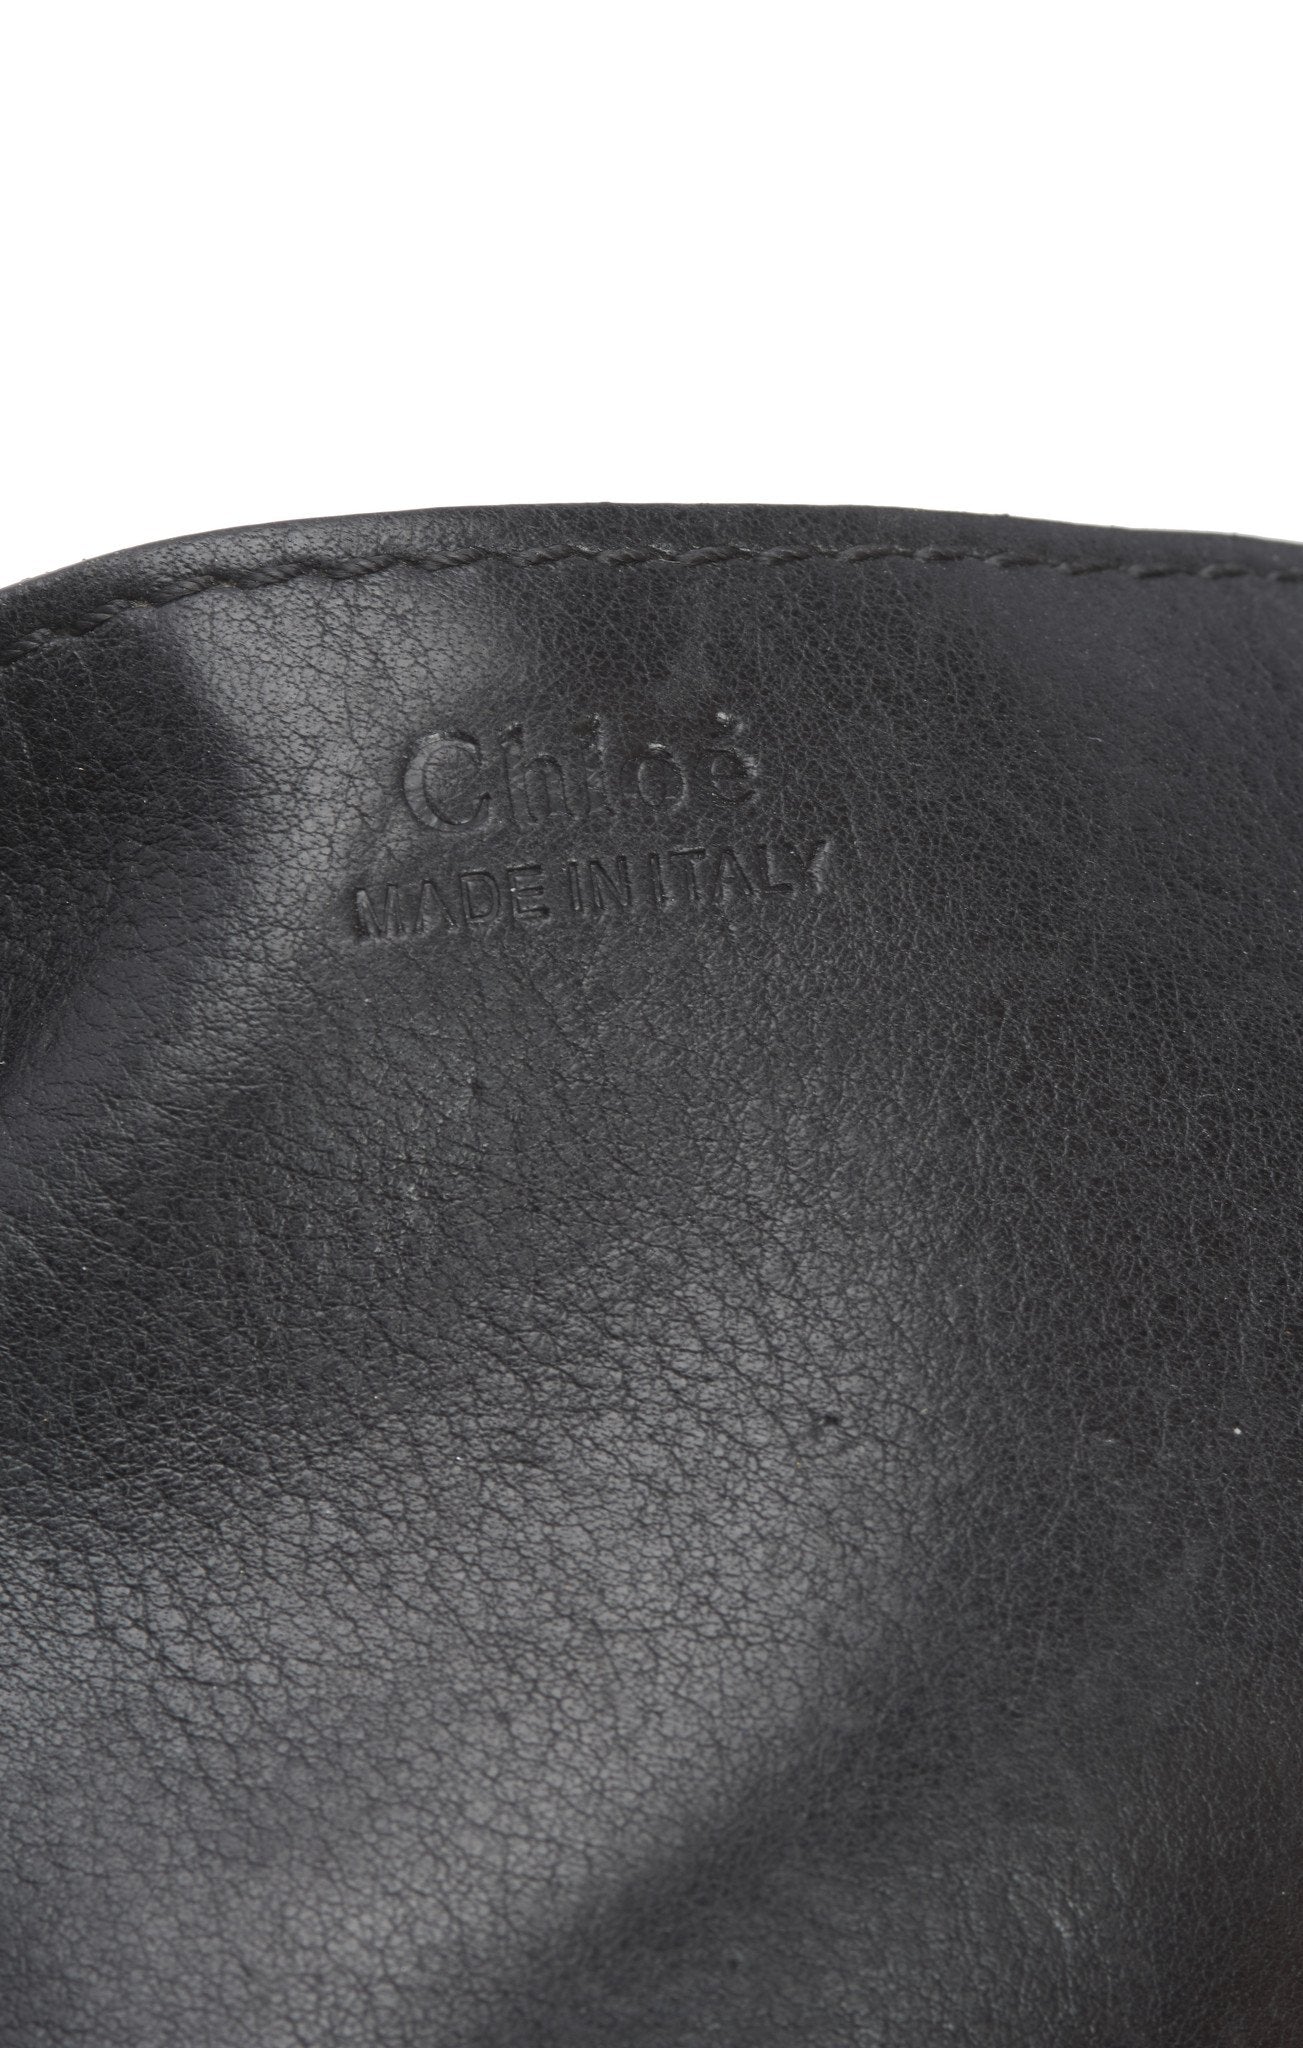 Chloé Black Leather Medium Lexa Shoulder Bag